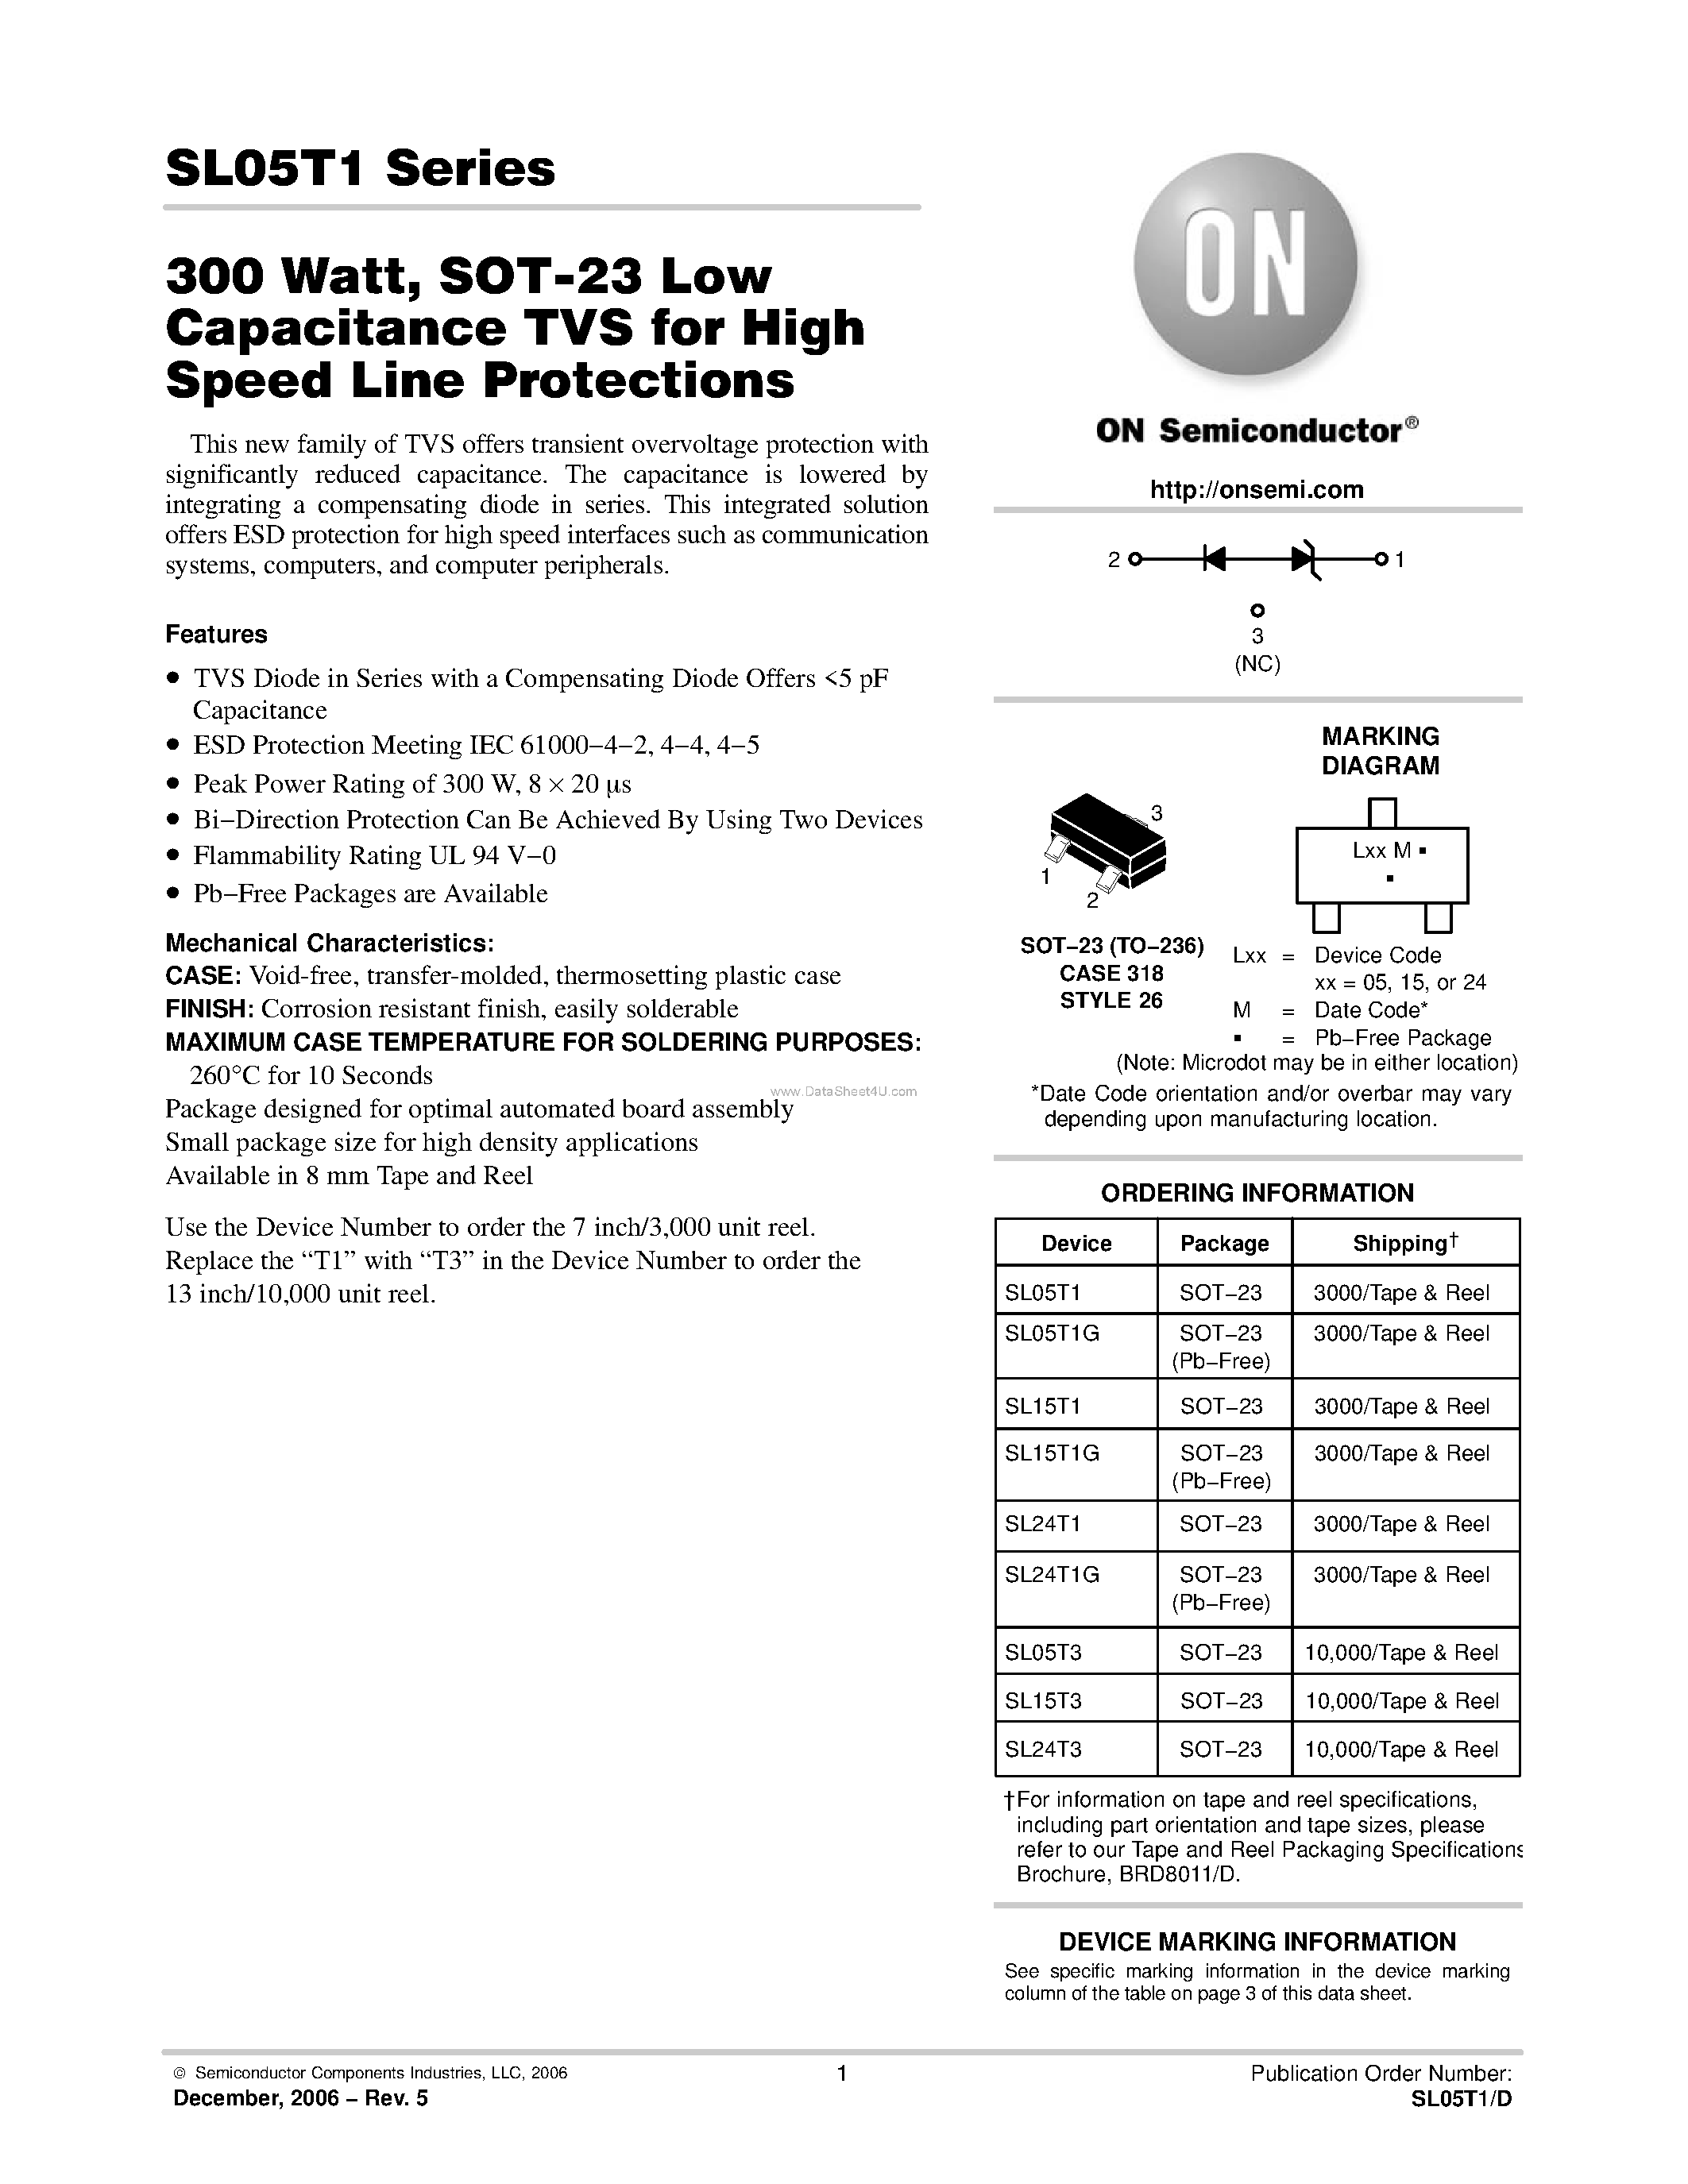 Даташит SL24T1 - SOT-23 Low Capacitance TVS страница 1